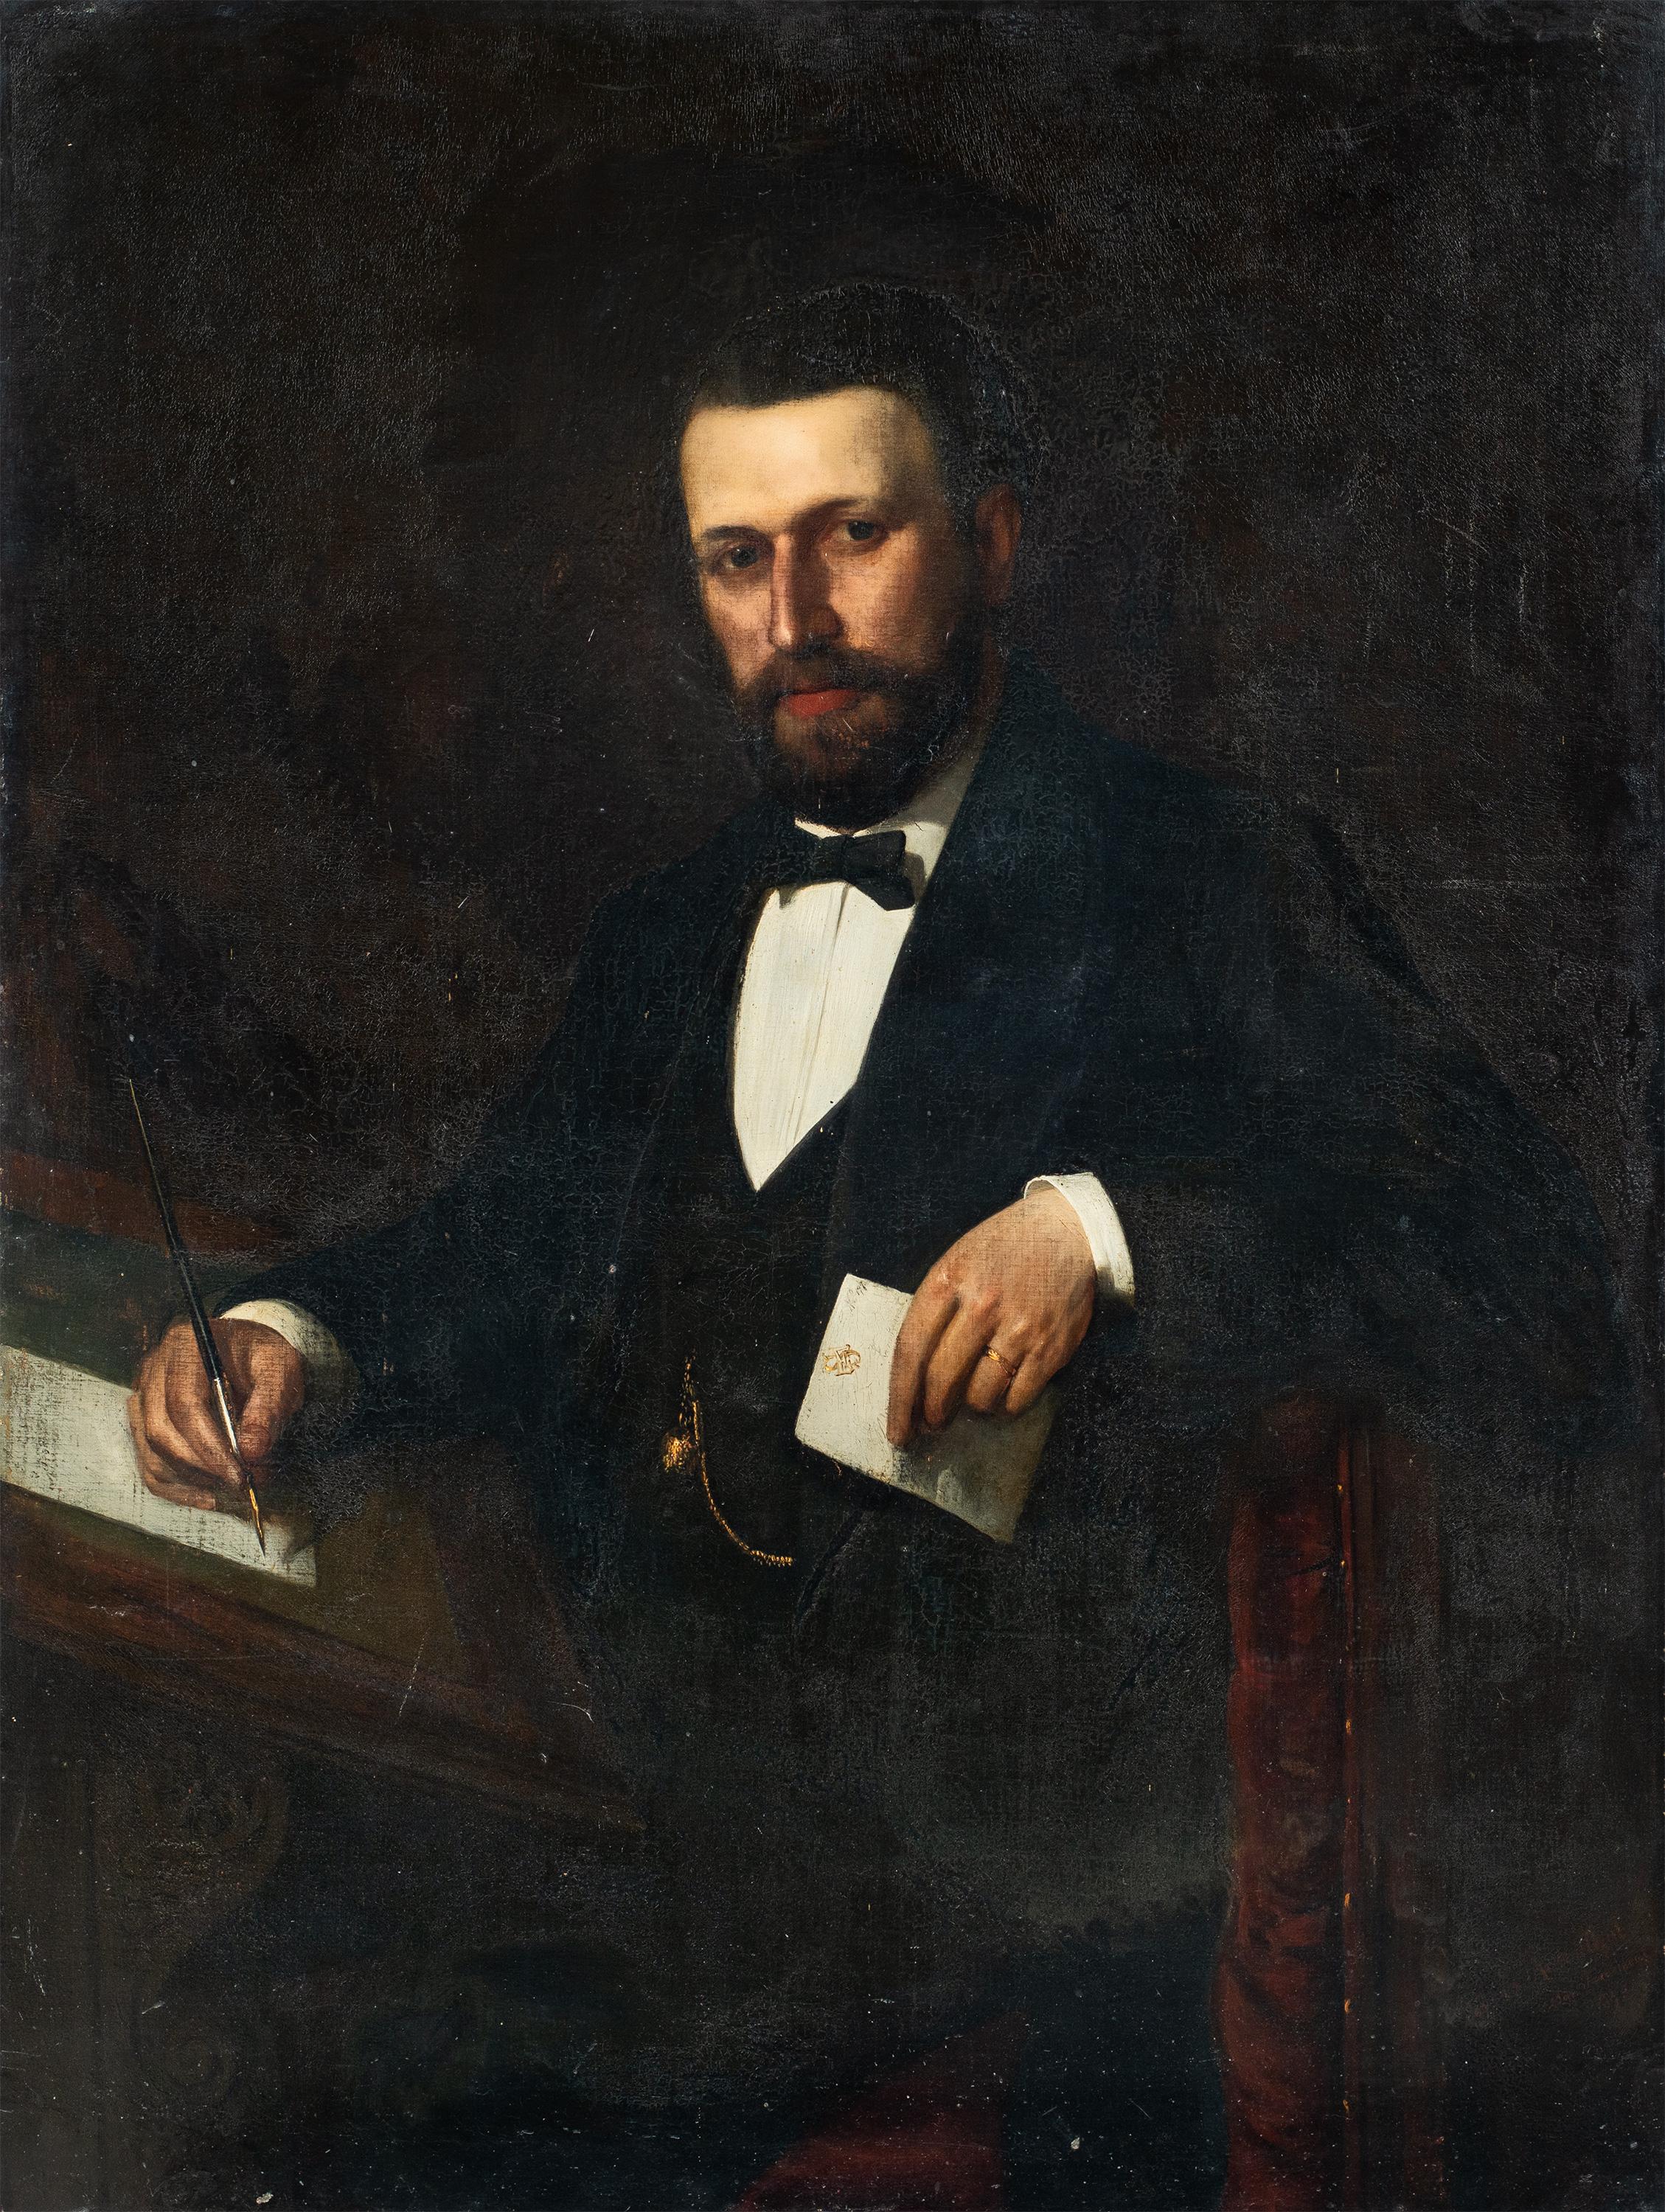 Toby Rosenthal (German Jewish painter) - 19th century figure painting - Portrait